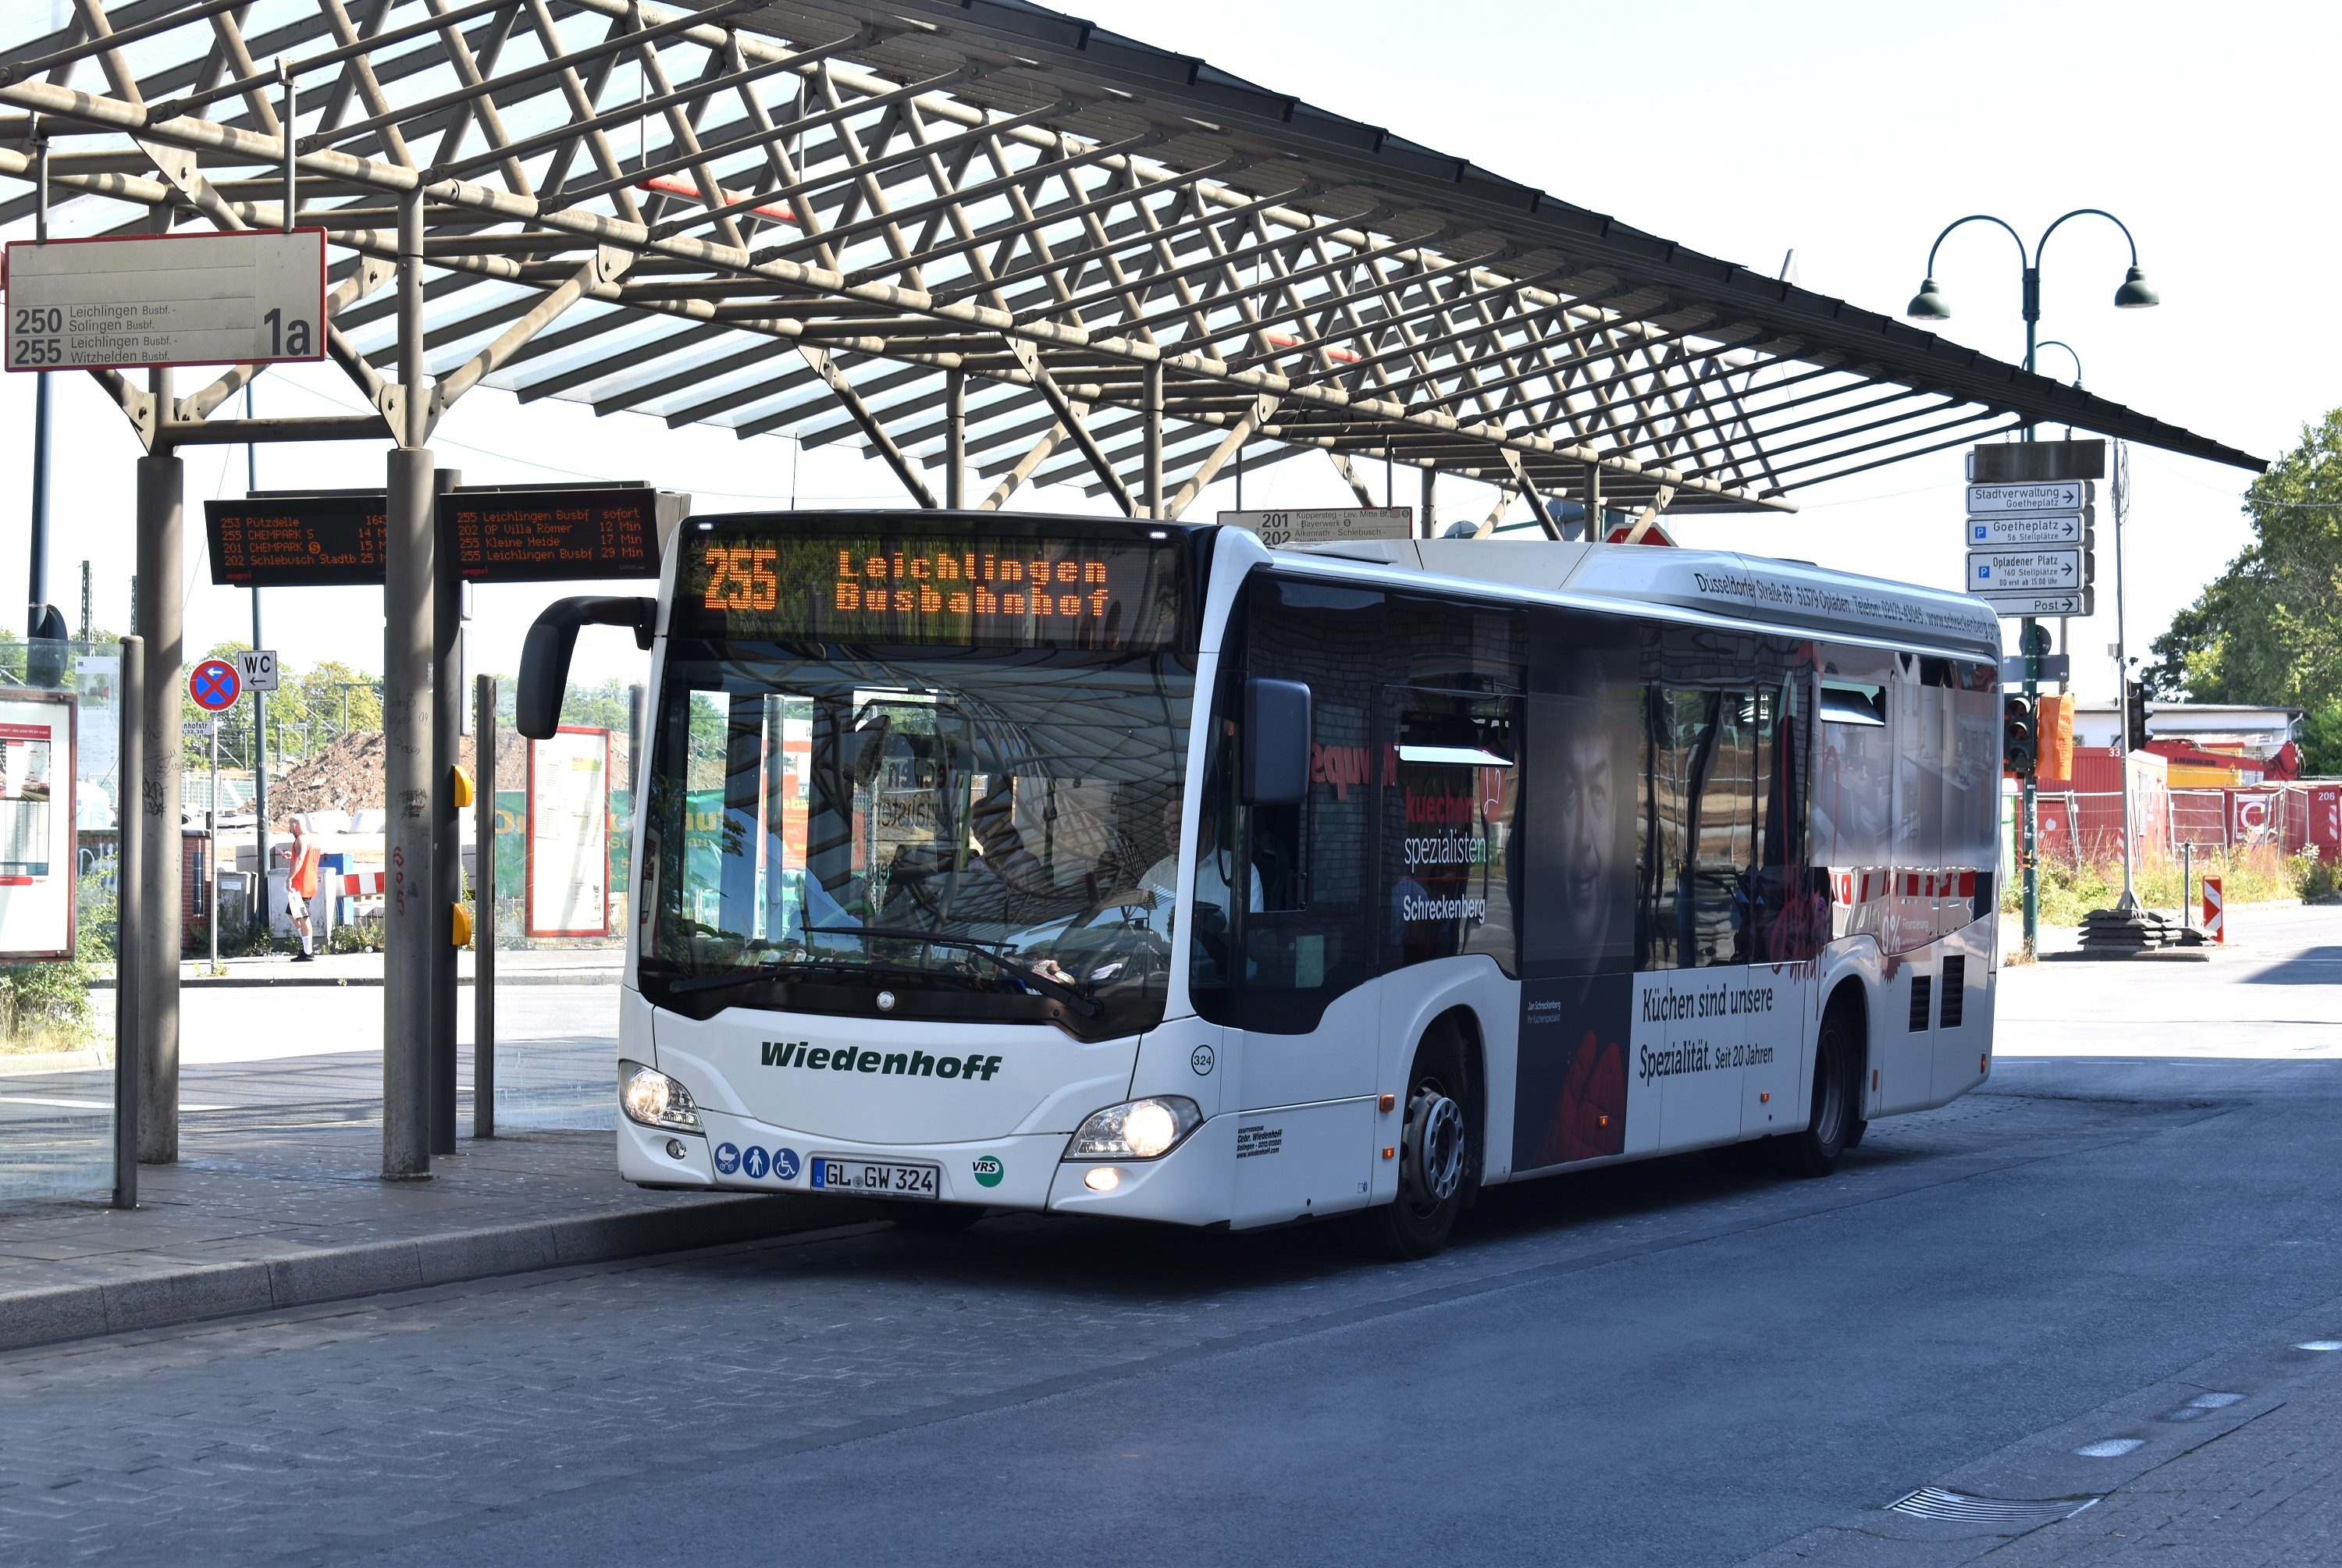 255 Leichlingen-Busbahnhof LEV-Opladen Bf